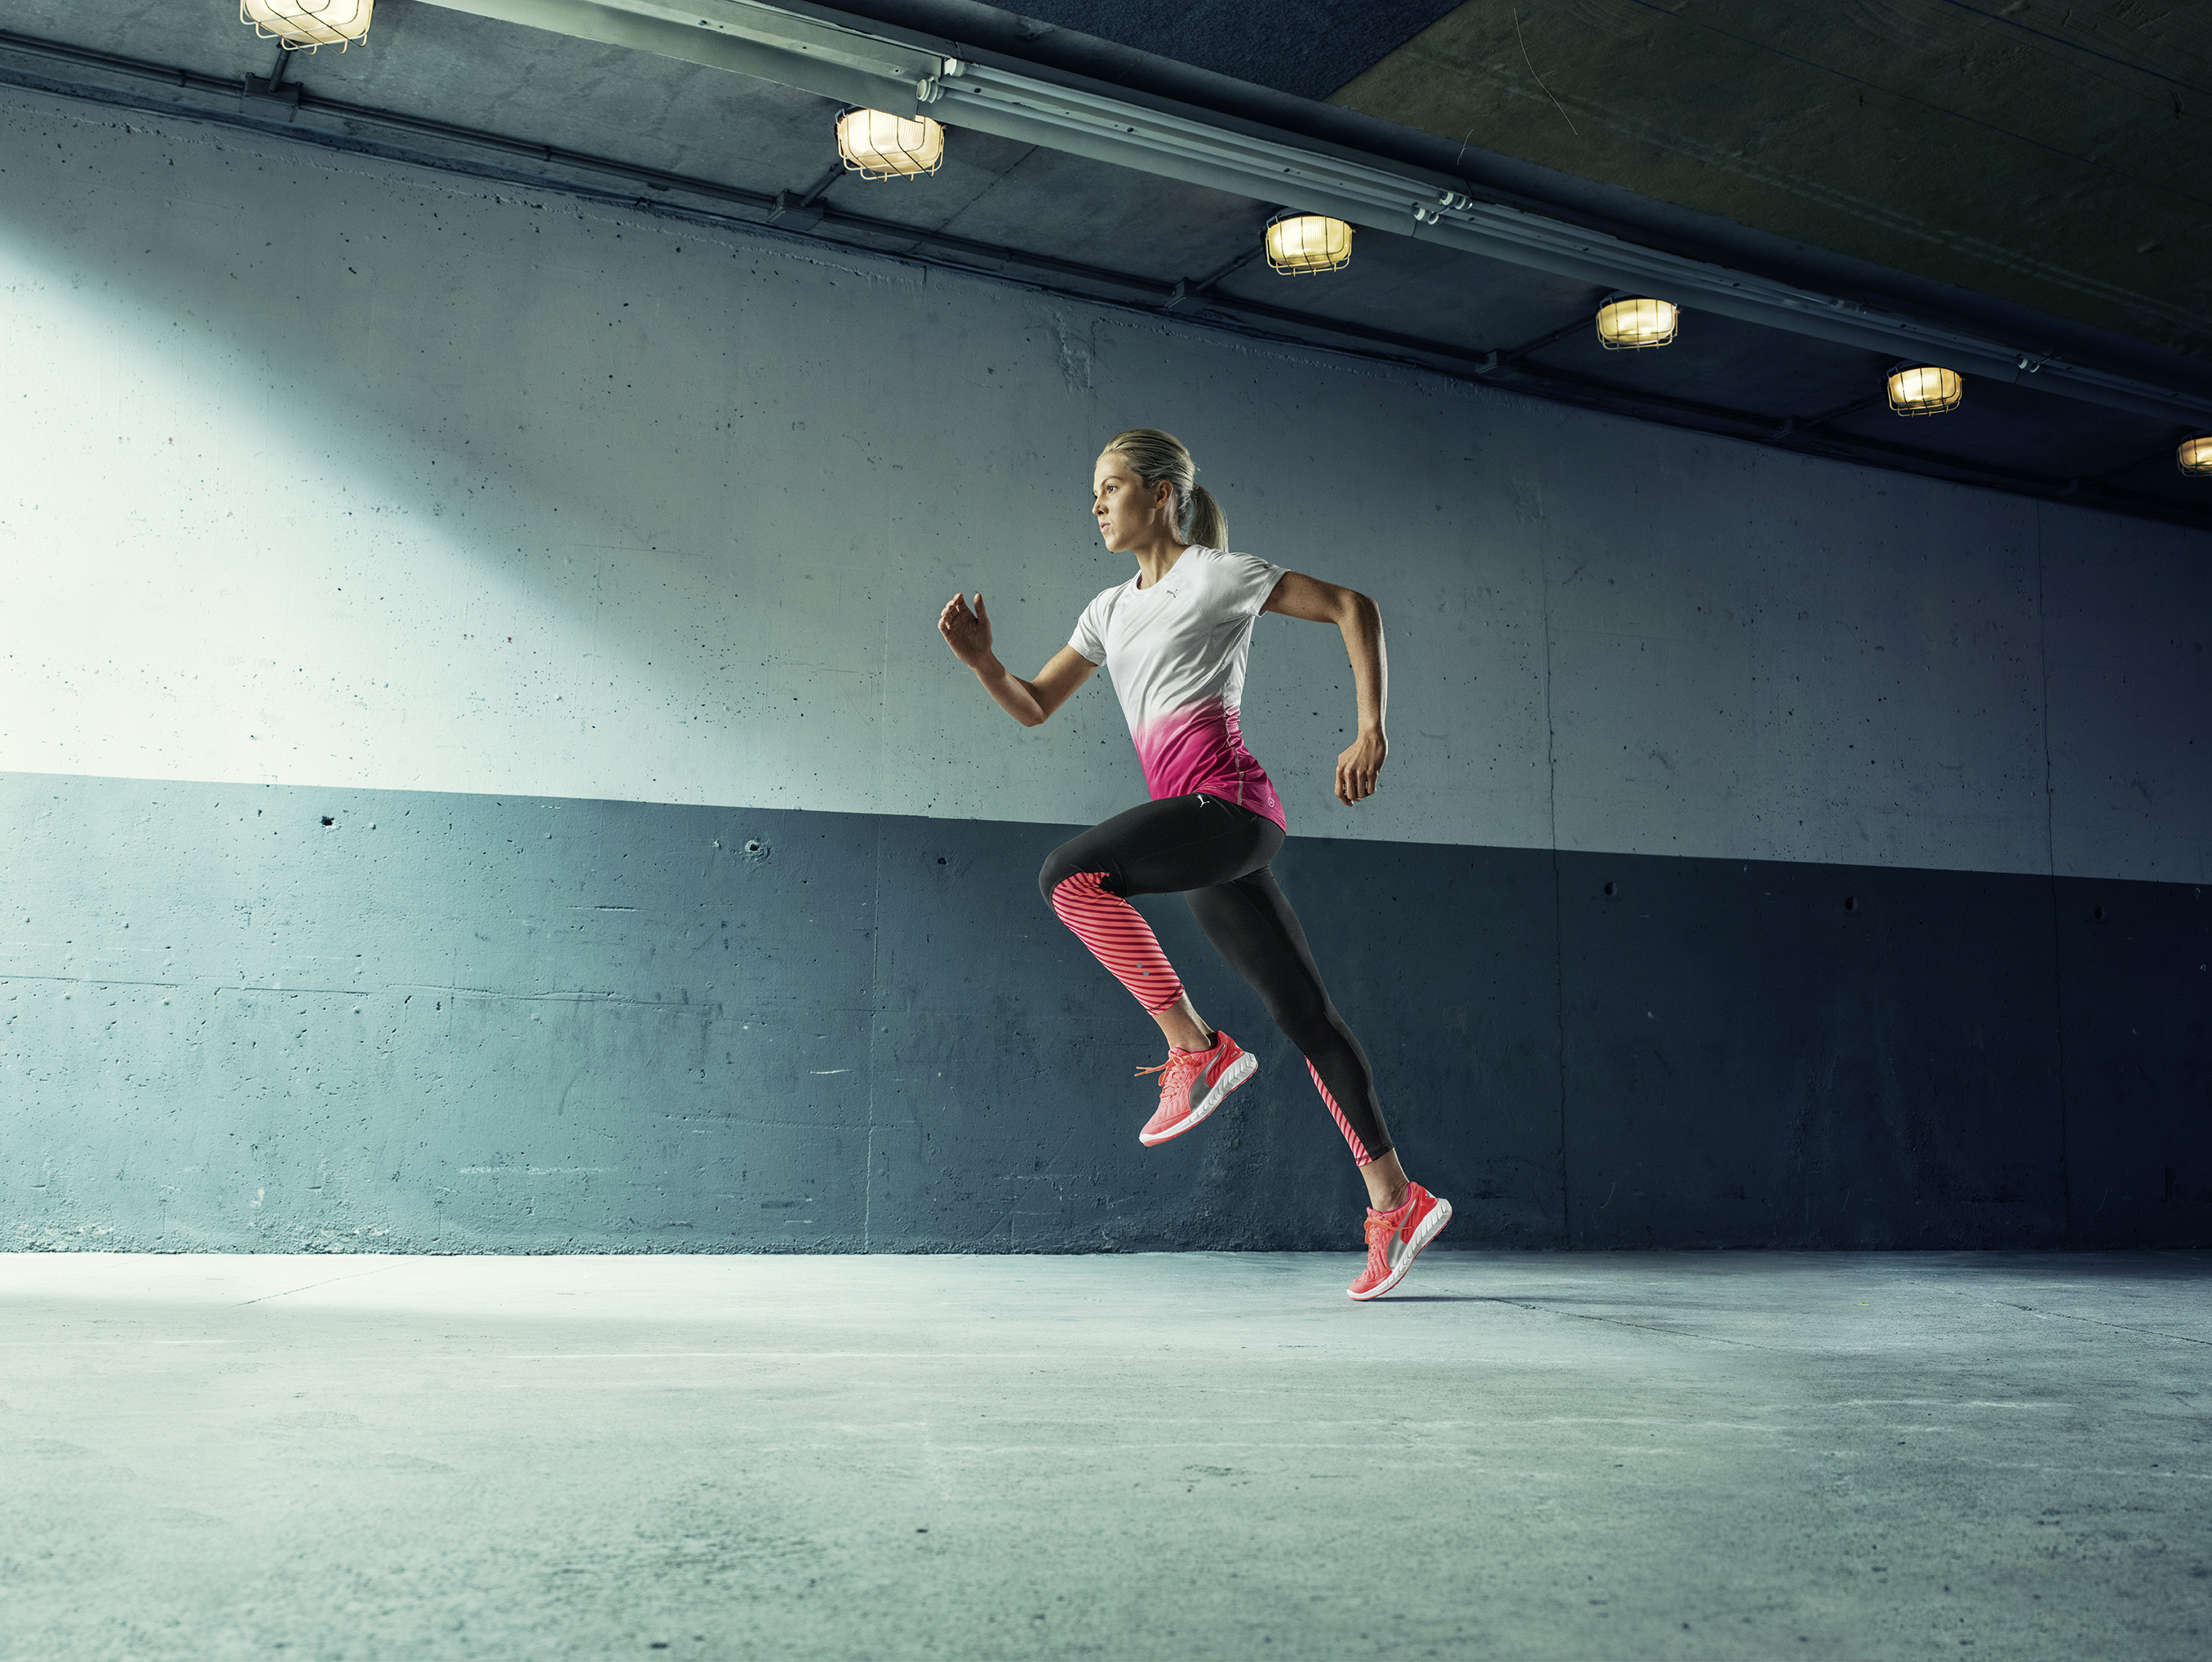 Bajo Instalar en pc Elaborar Review: PUMA IGNITE Ultimate Women's Running Shoe